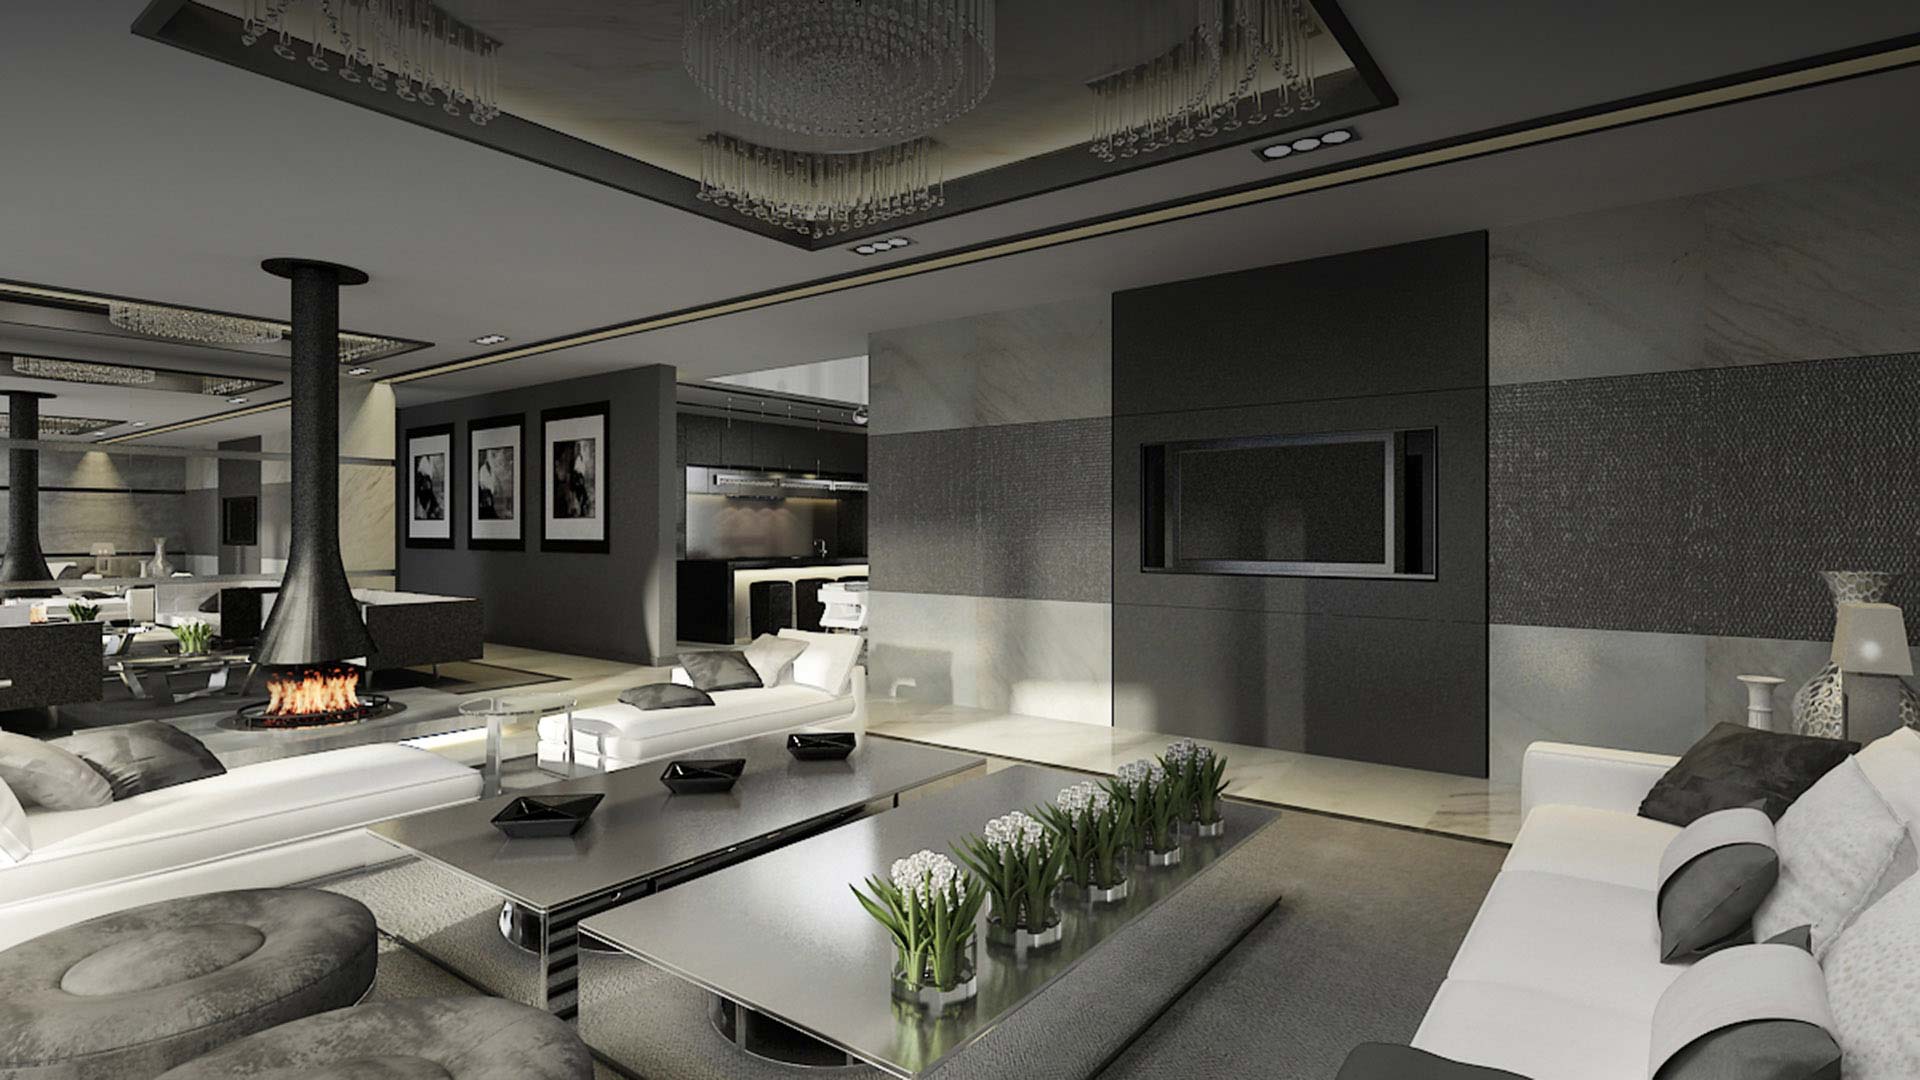  Contemporary Interior  Design  A Classy Approach 